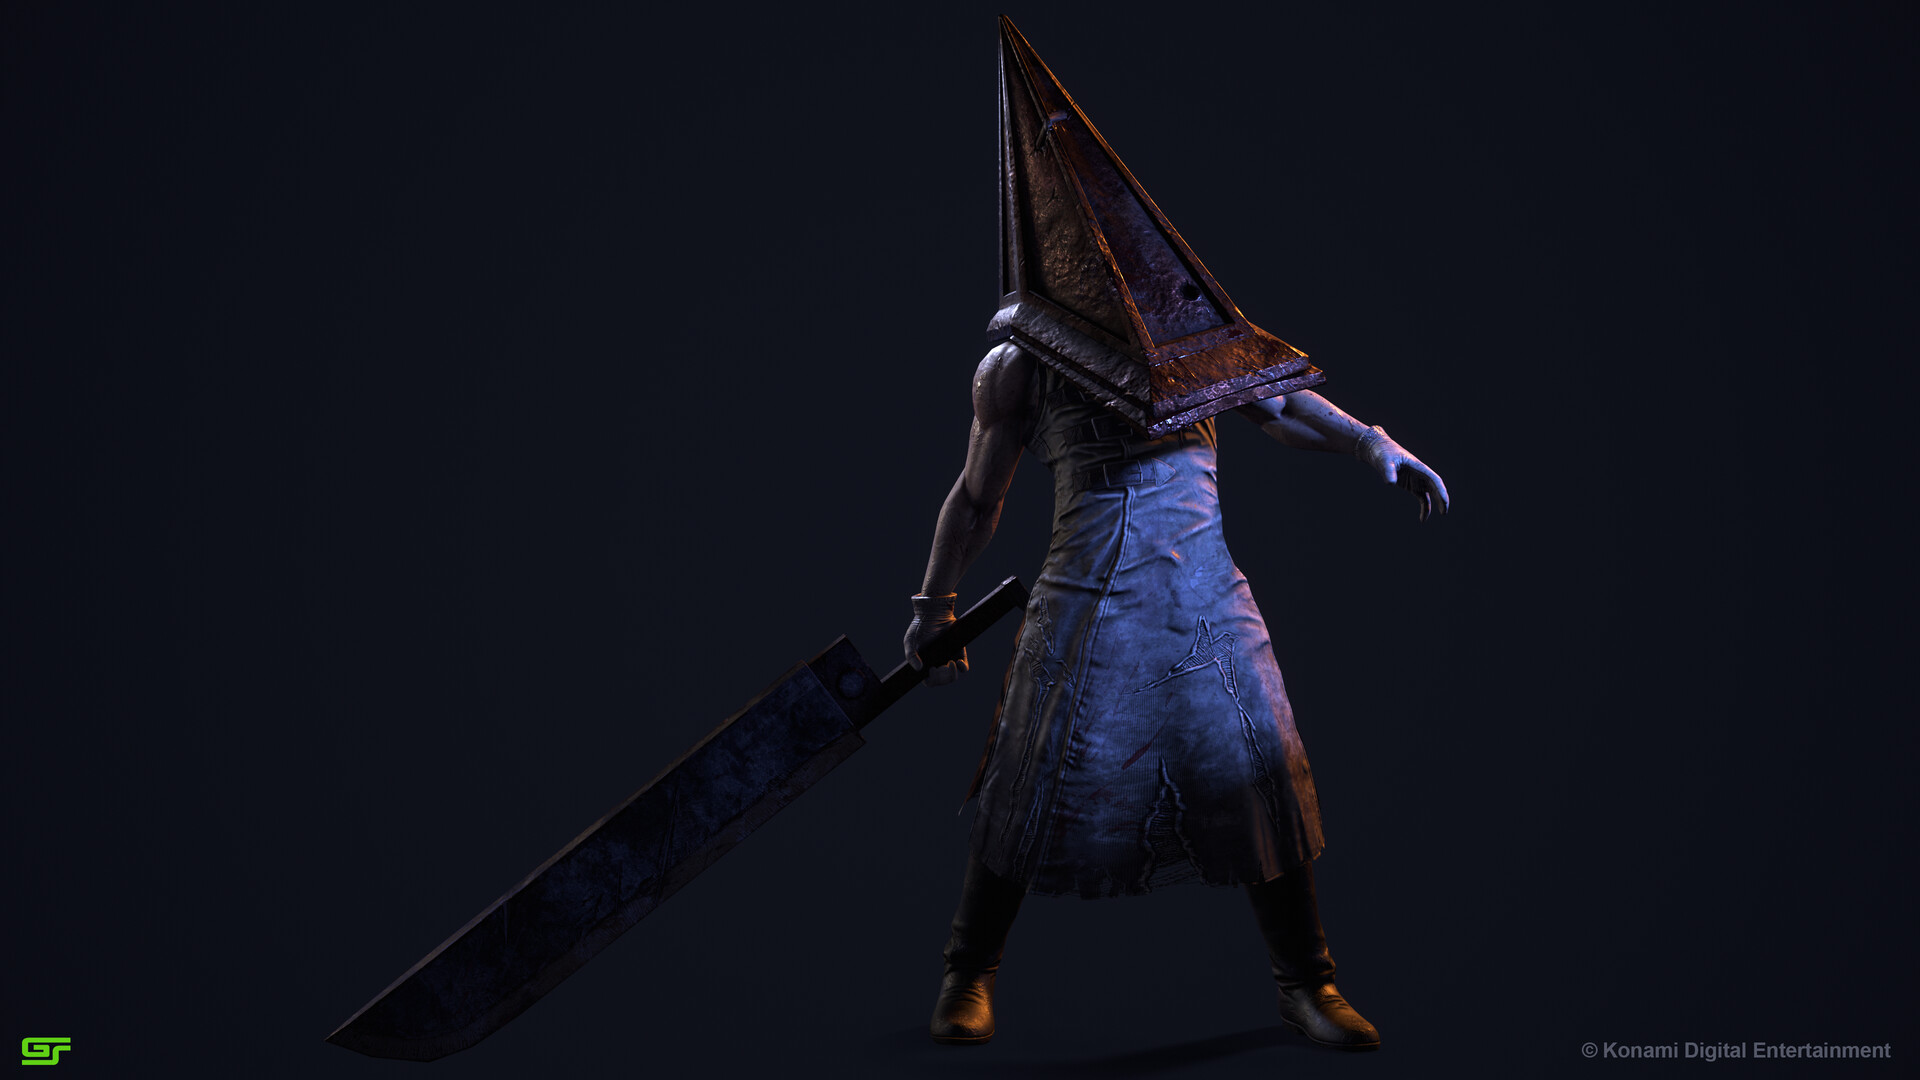 Pyramid head ( with removable helmet) (Silent Hill) Custom Action